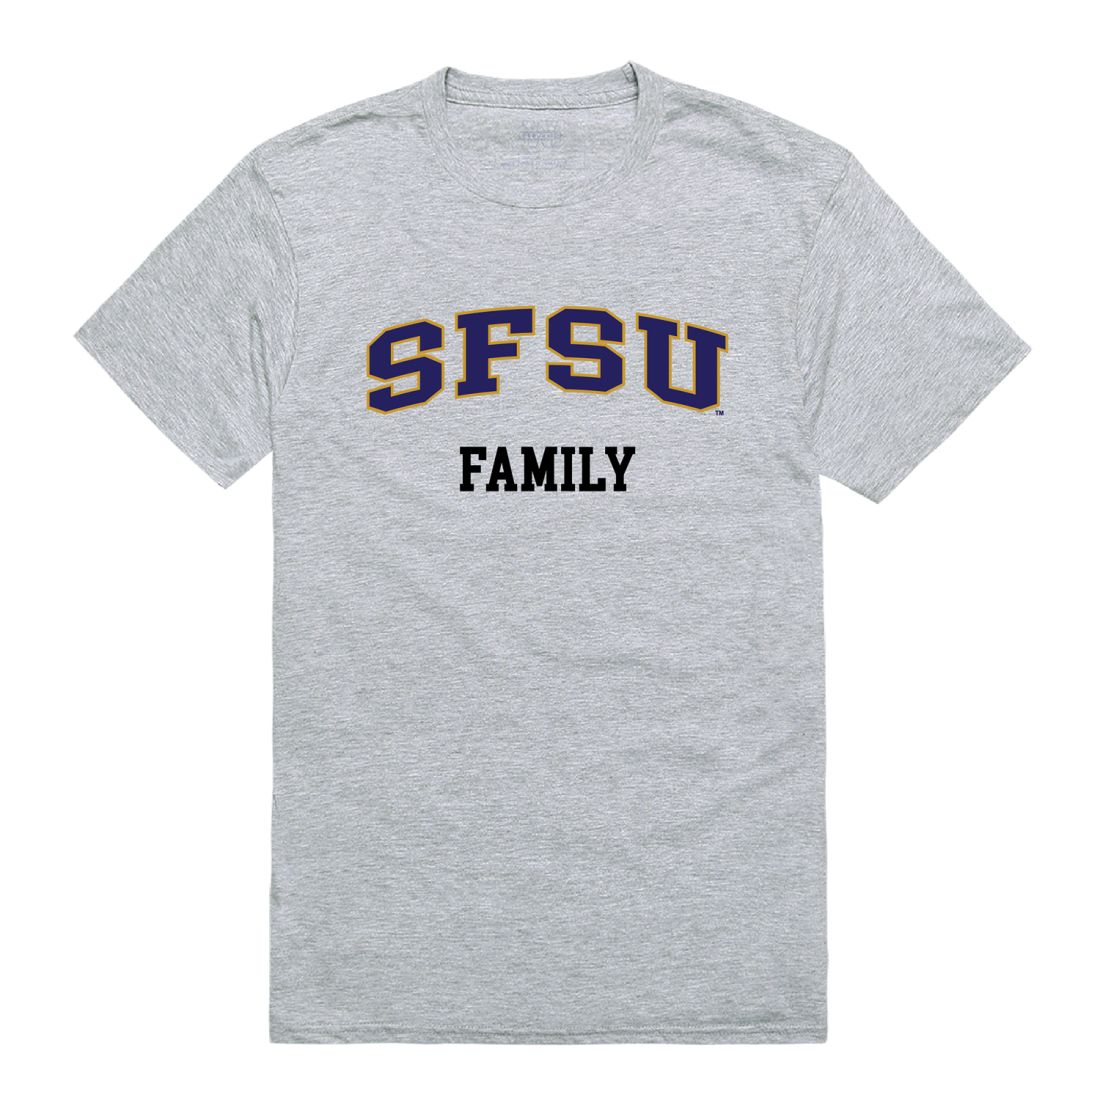 SFSU San Francisco State University Gators Family T-Shirt